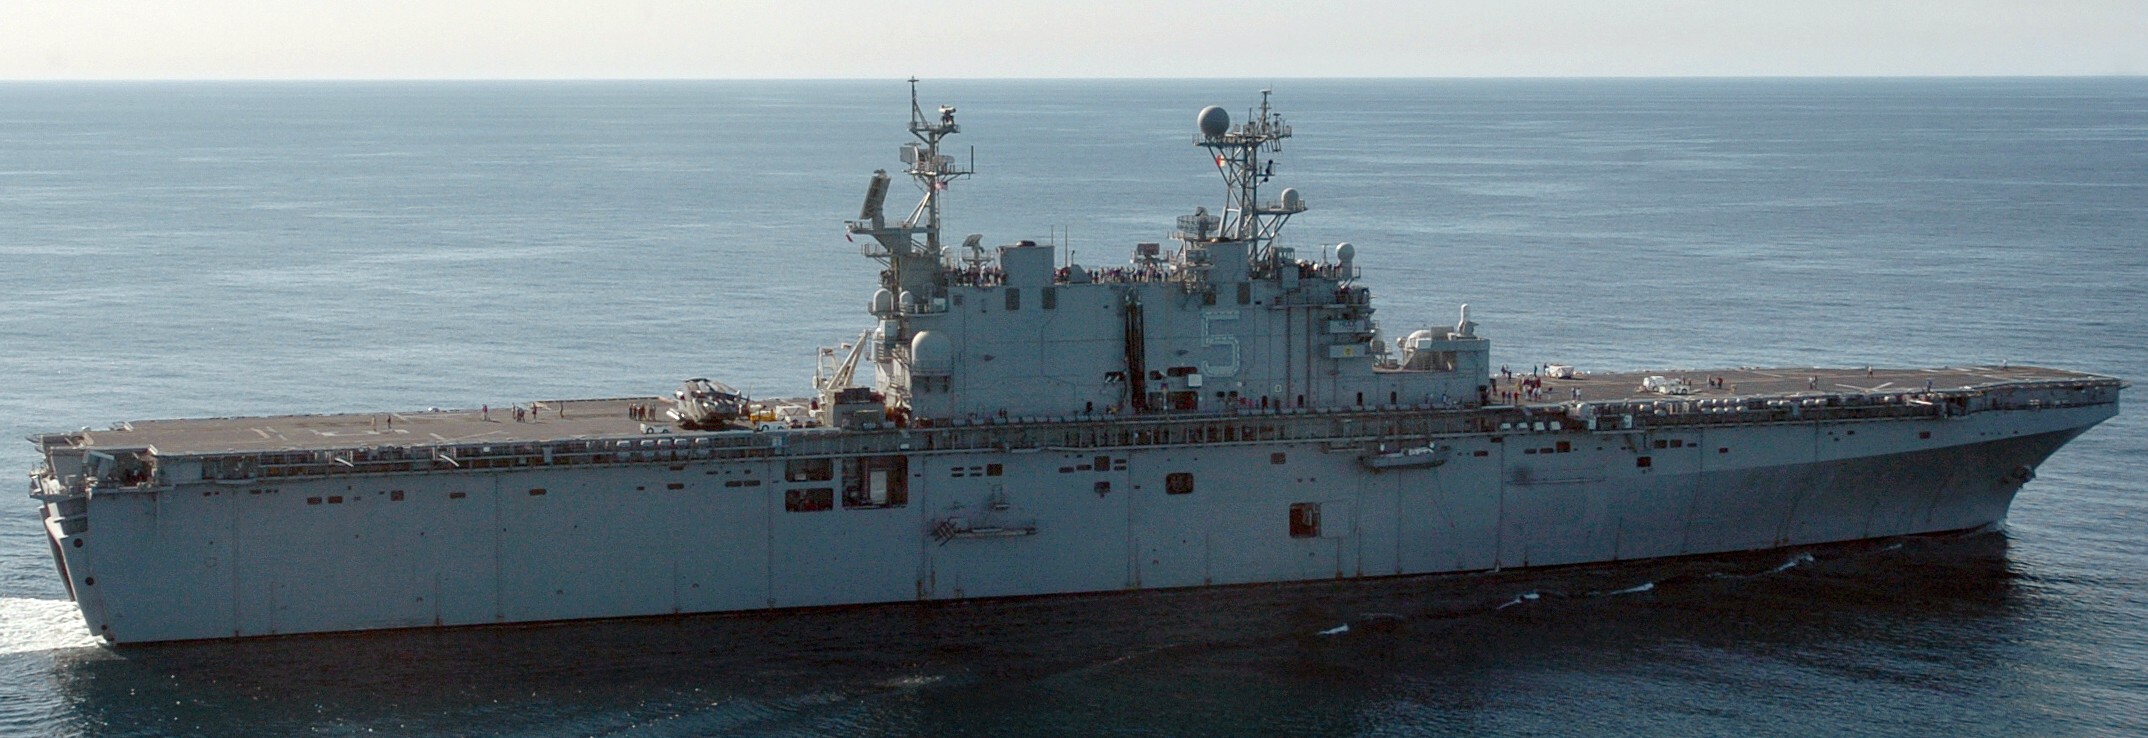 lha-5 uss peleliu tarawa class amphibious assault ship landing helicopter us navy marines 09